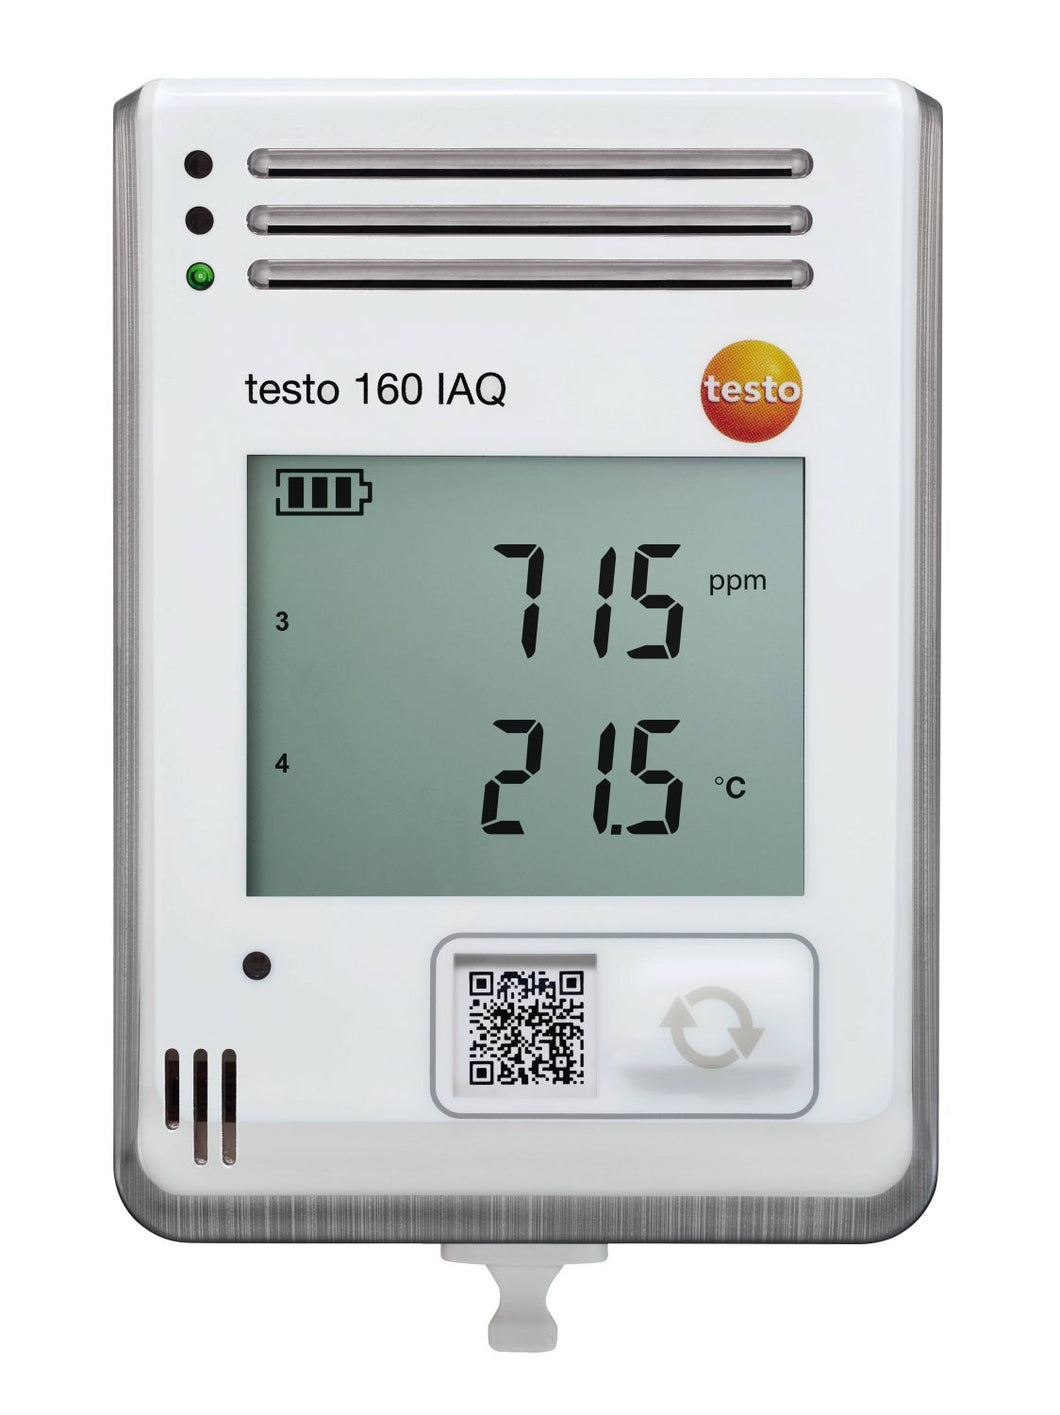 testo 160 IAQ indoor air quality instrument 05722014 0572 2014